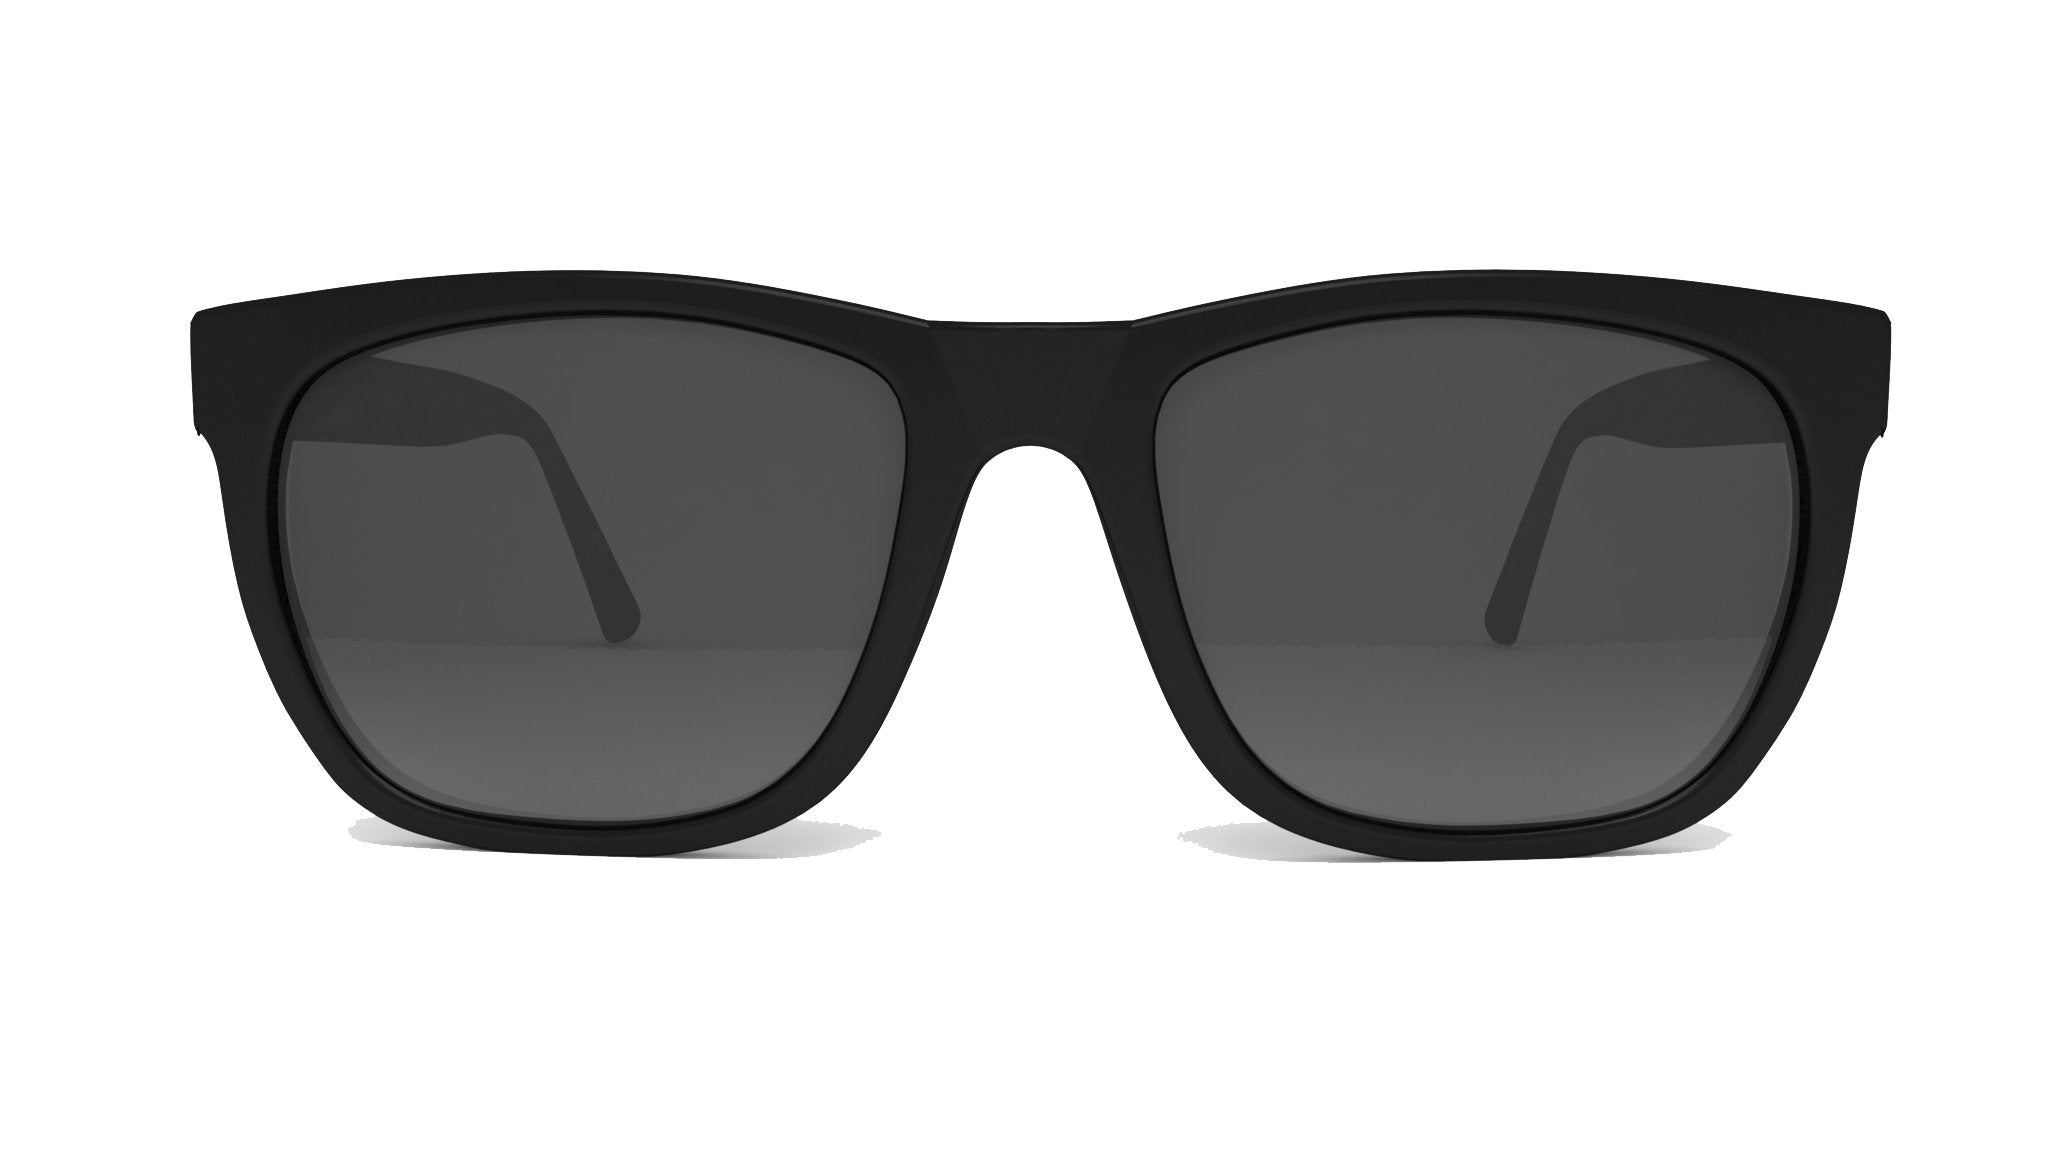 Lorenz Combo of Black Sunglasses, Men's Watch & Black Wallet - Lorenz Fashion